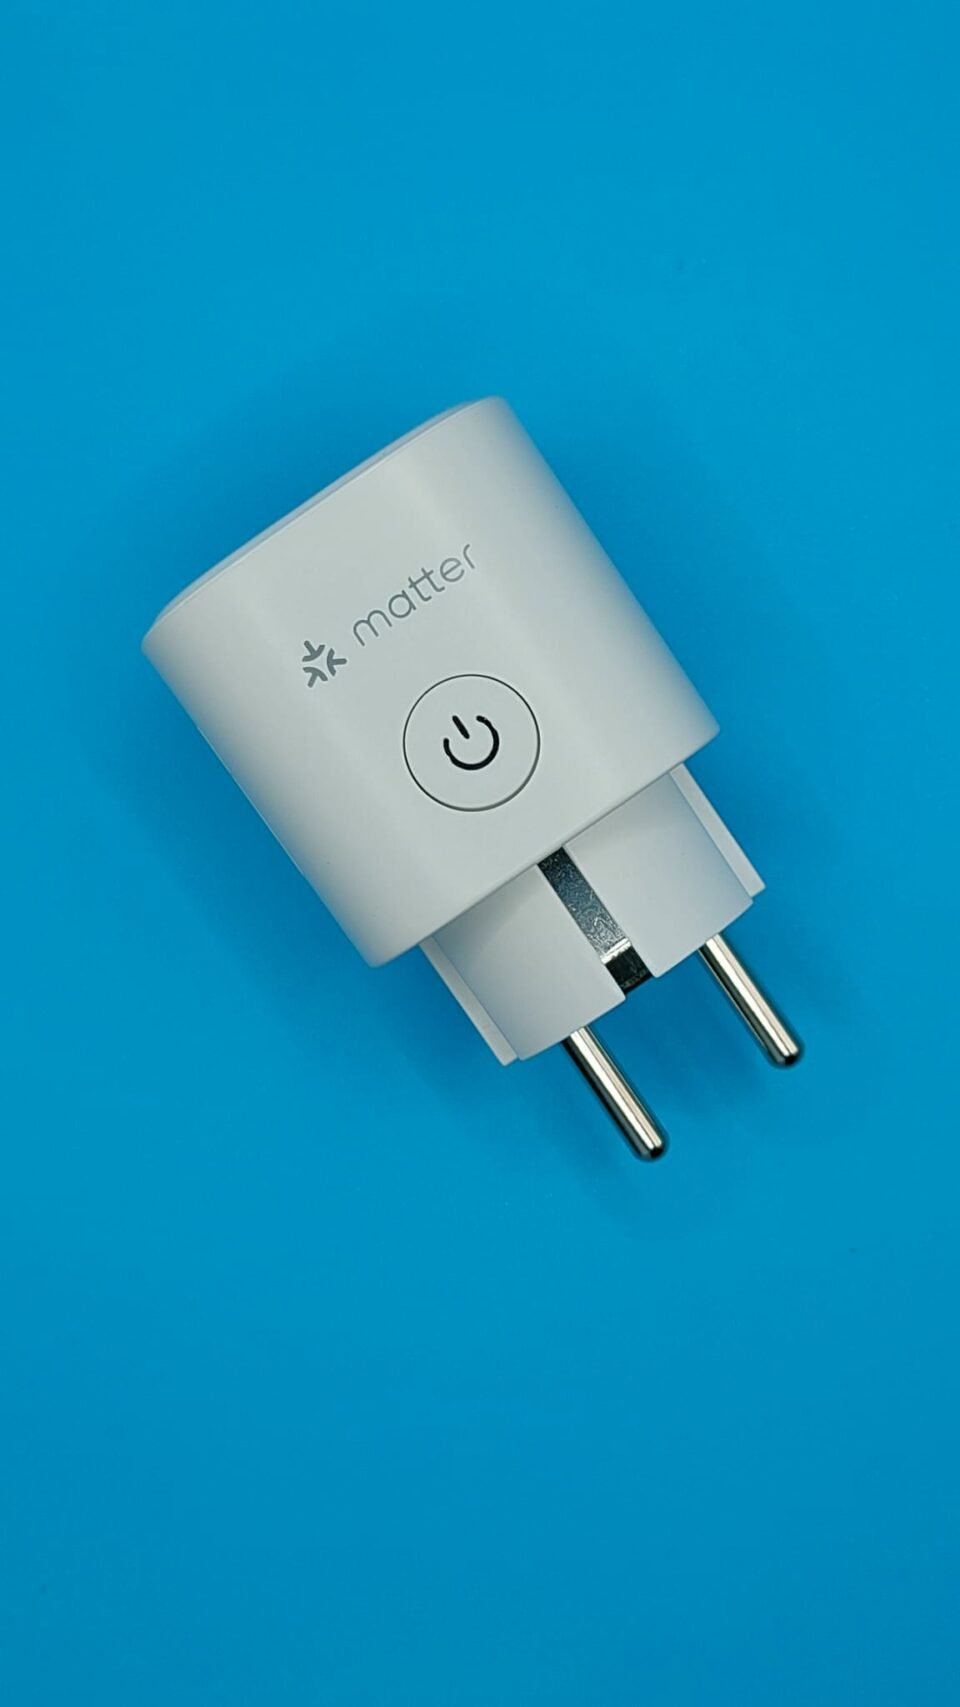 Meross Matter Smart Wi-Fi Plug with Energy Monitor